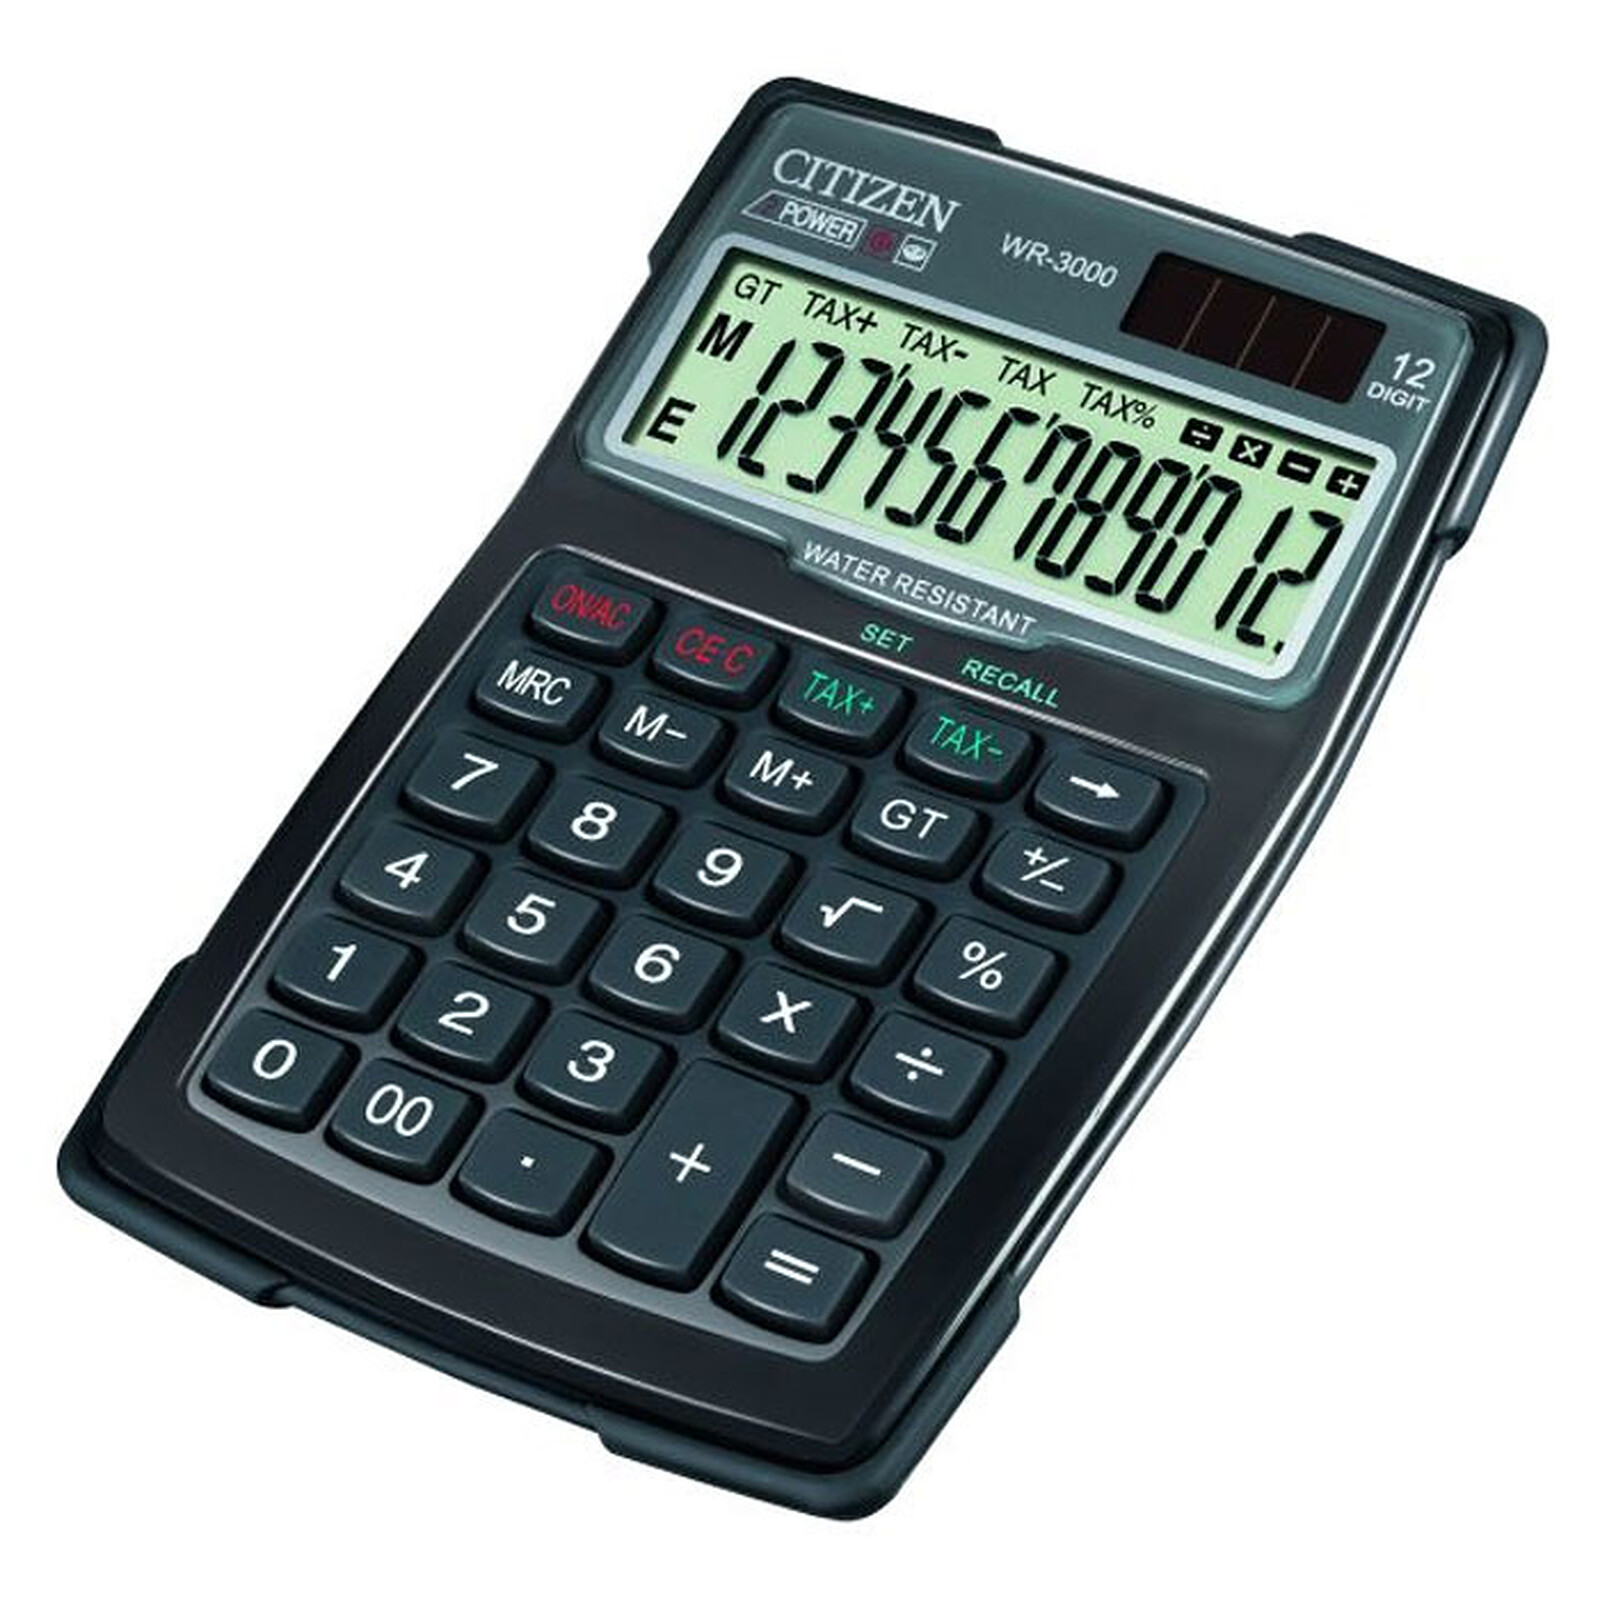 Texas Instruments TI-83 Premium CE Edition Python - Blanc - Calculatrice -  Garantie 3 ans LDLC